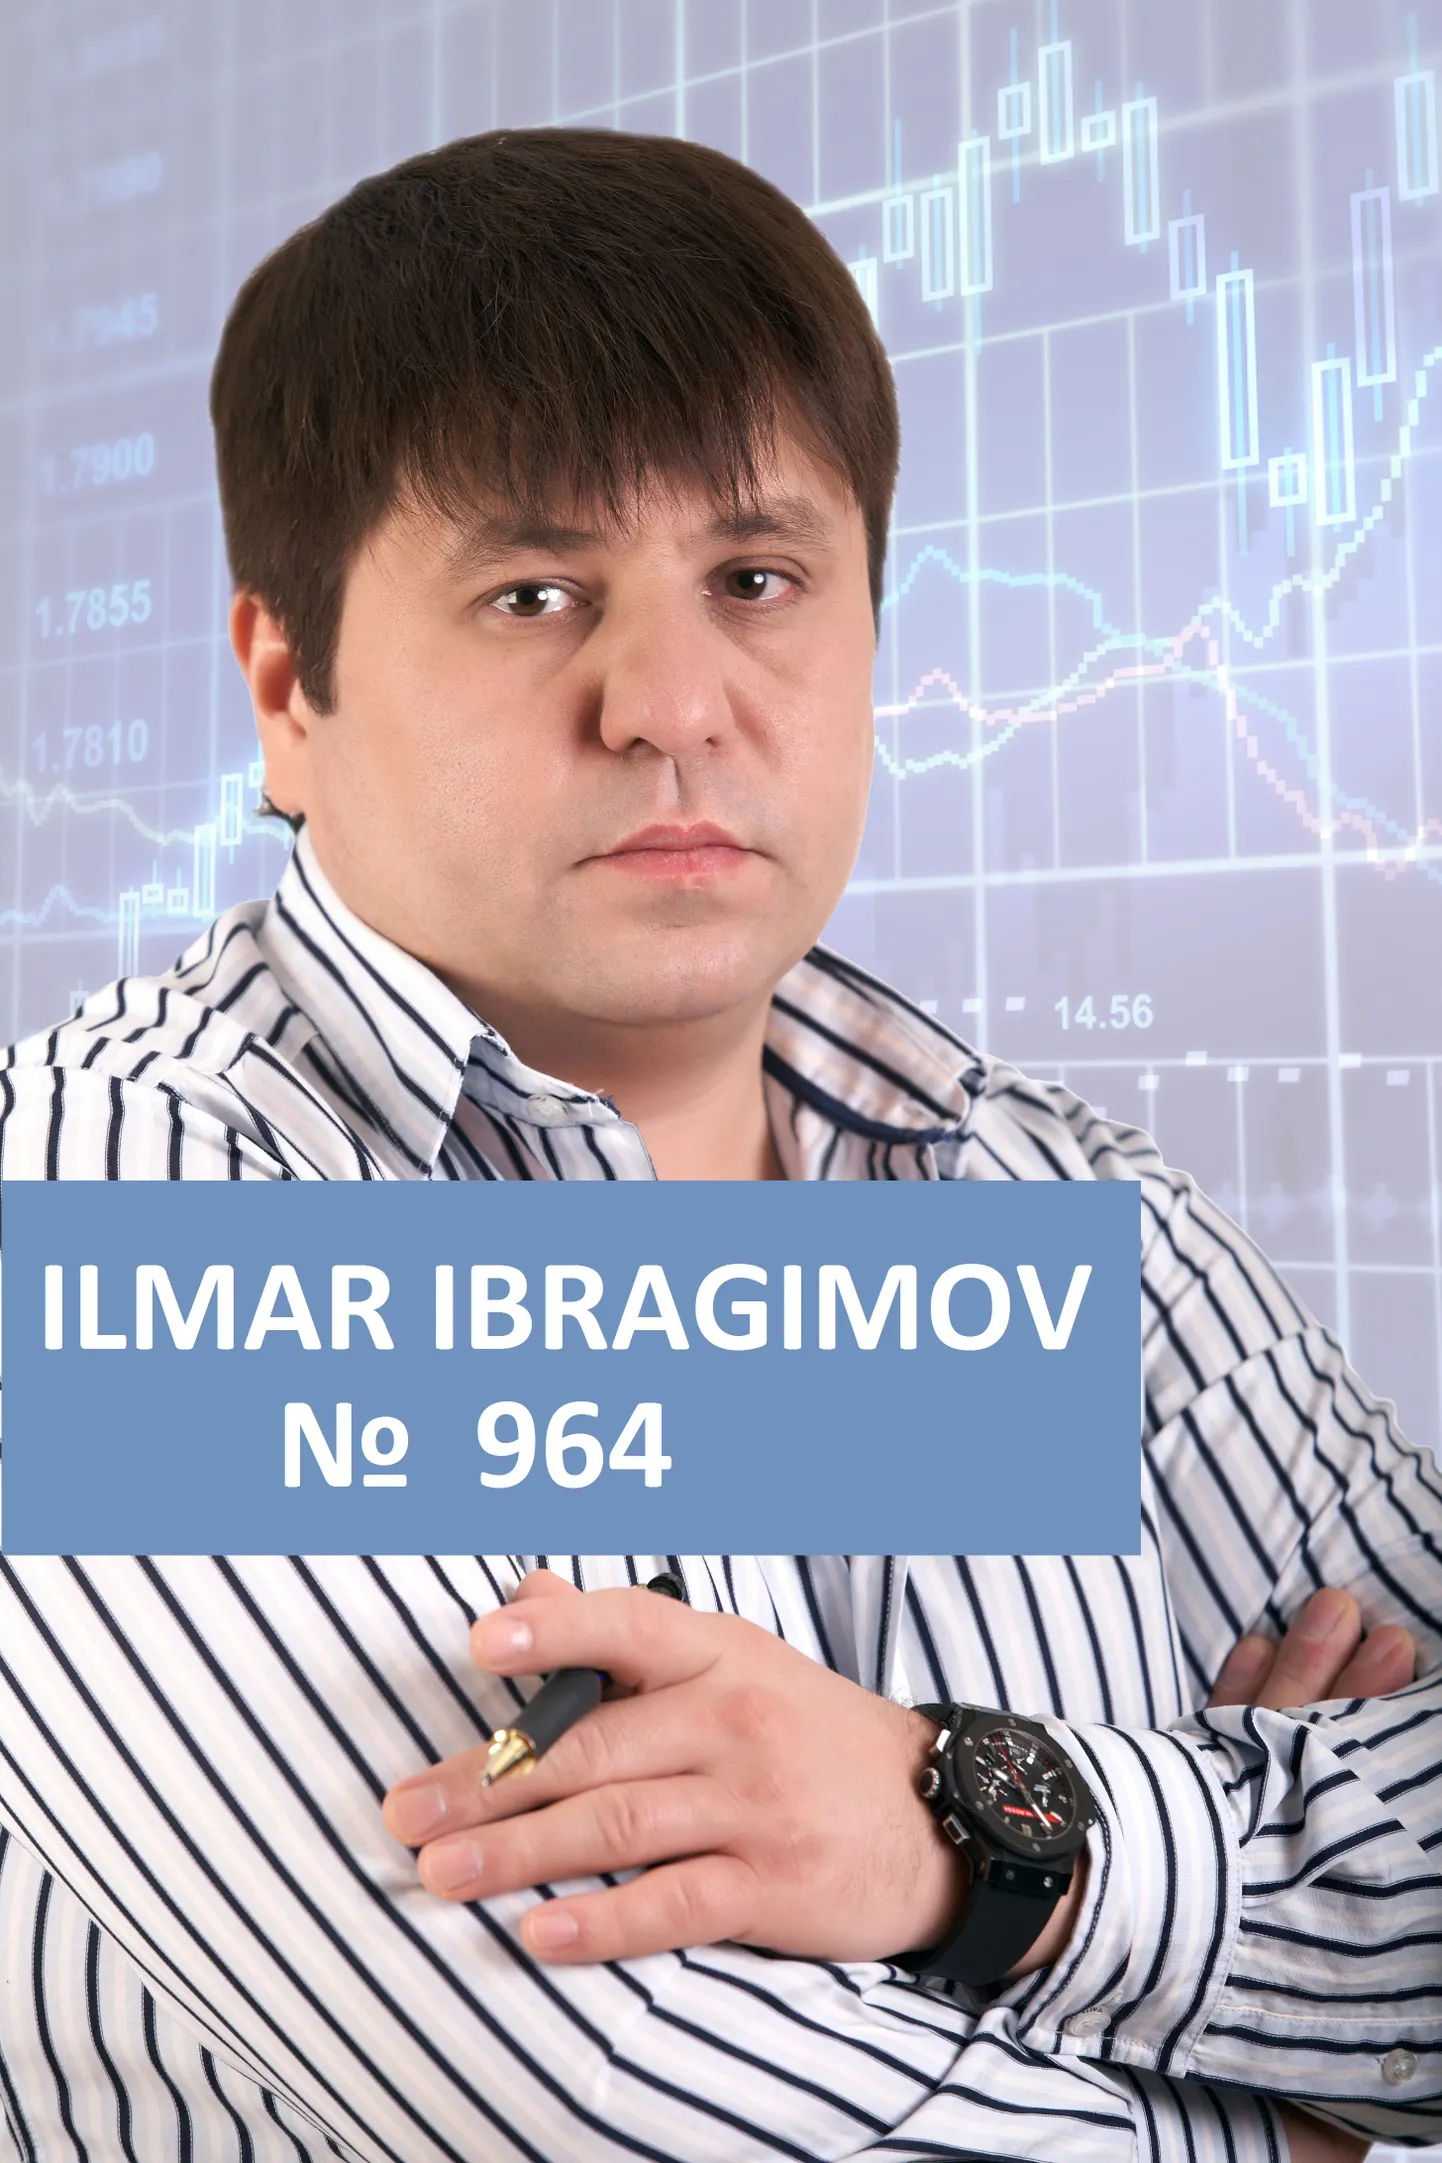 Ilmar Ibragimov